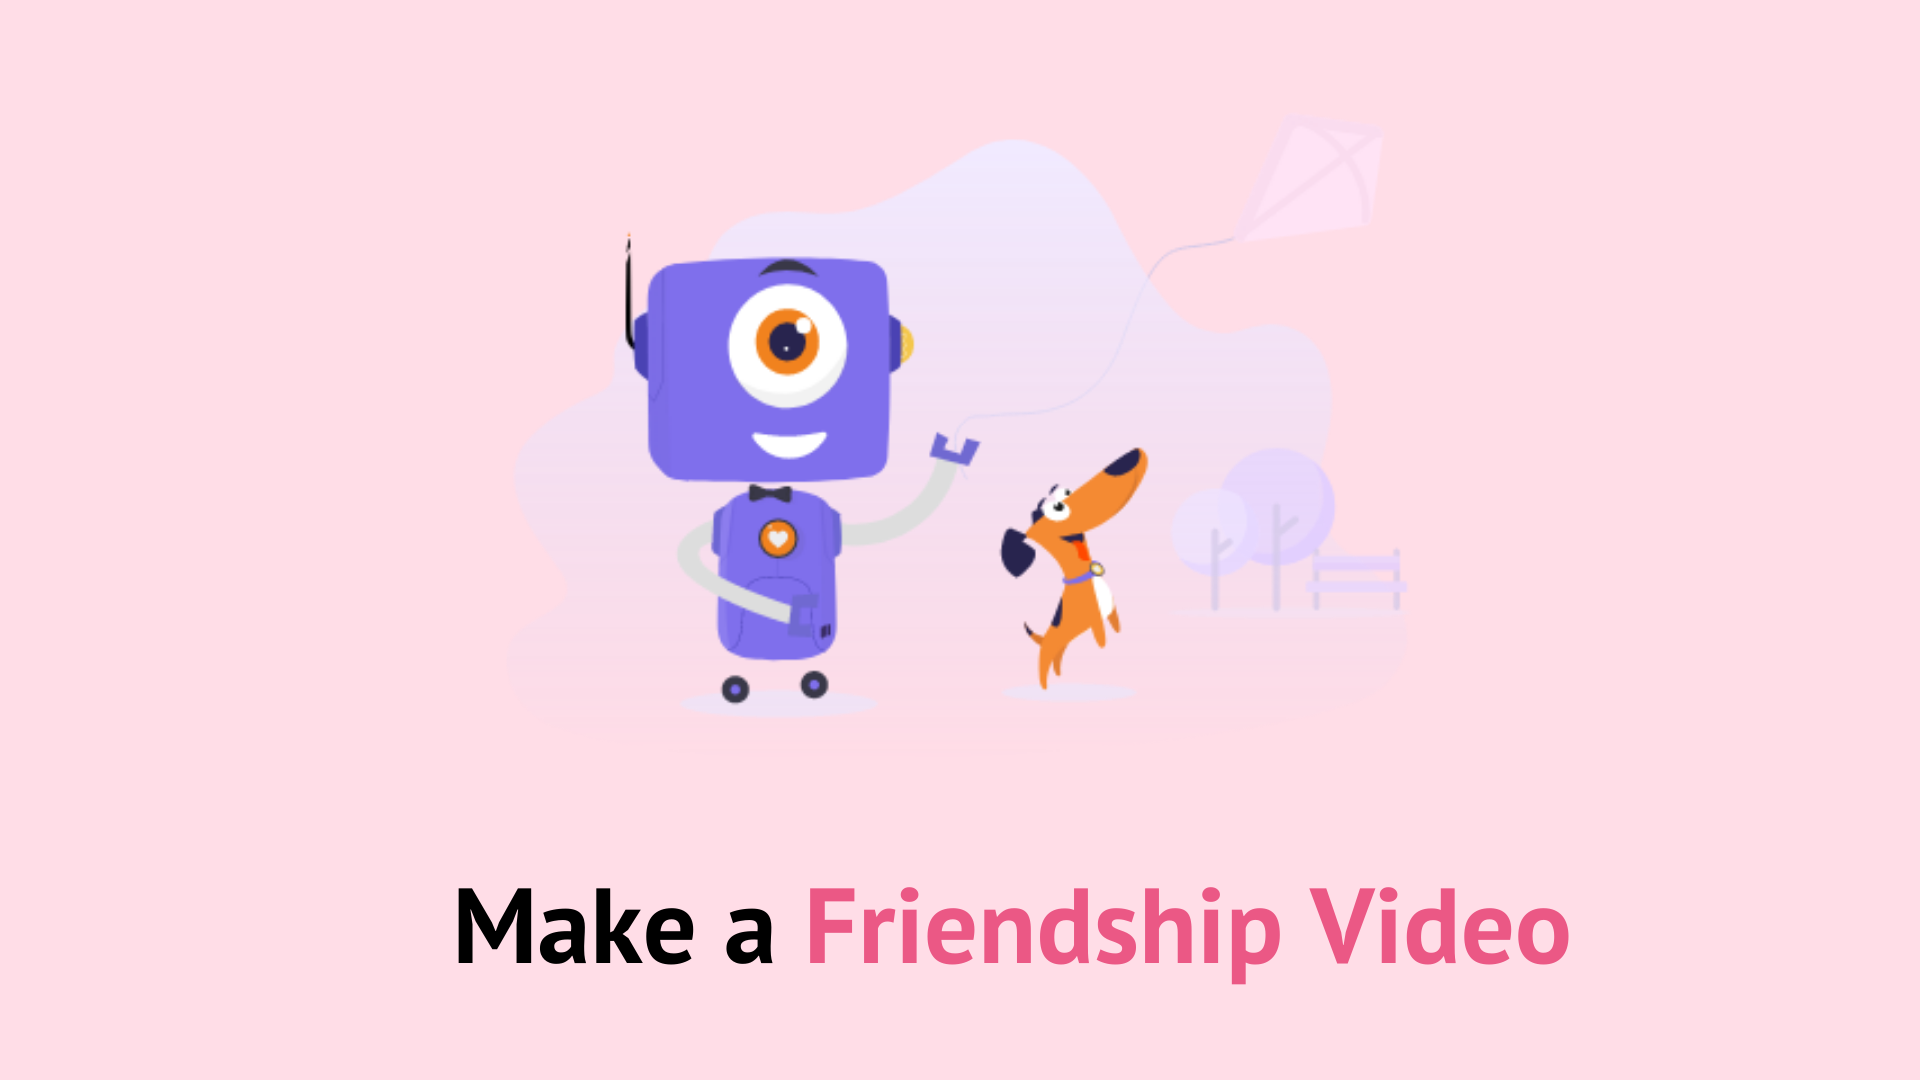 Friendship video maker